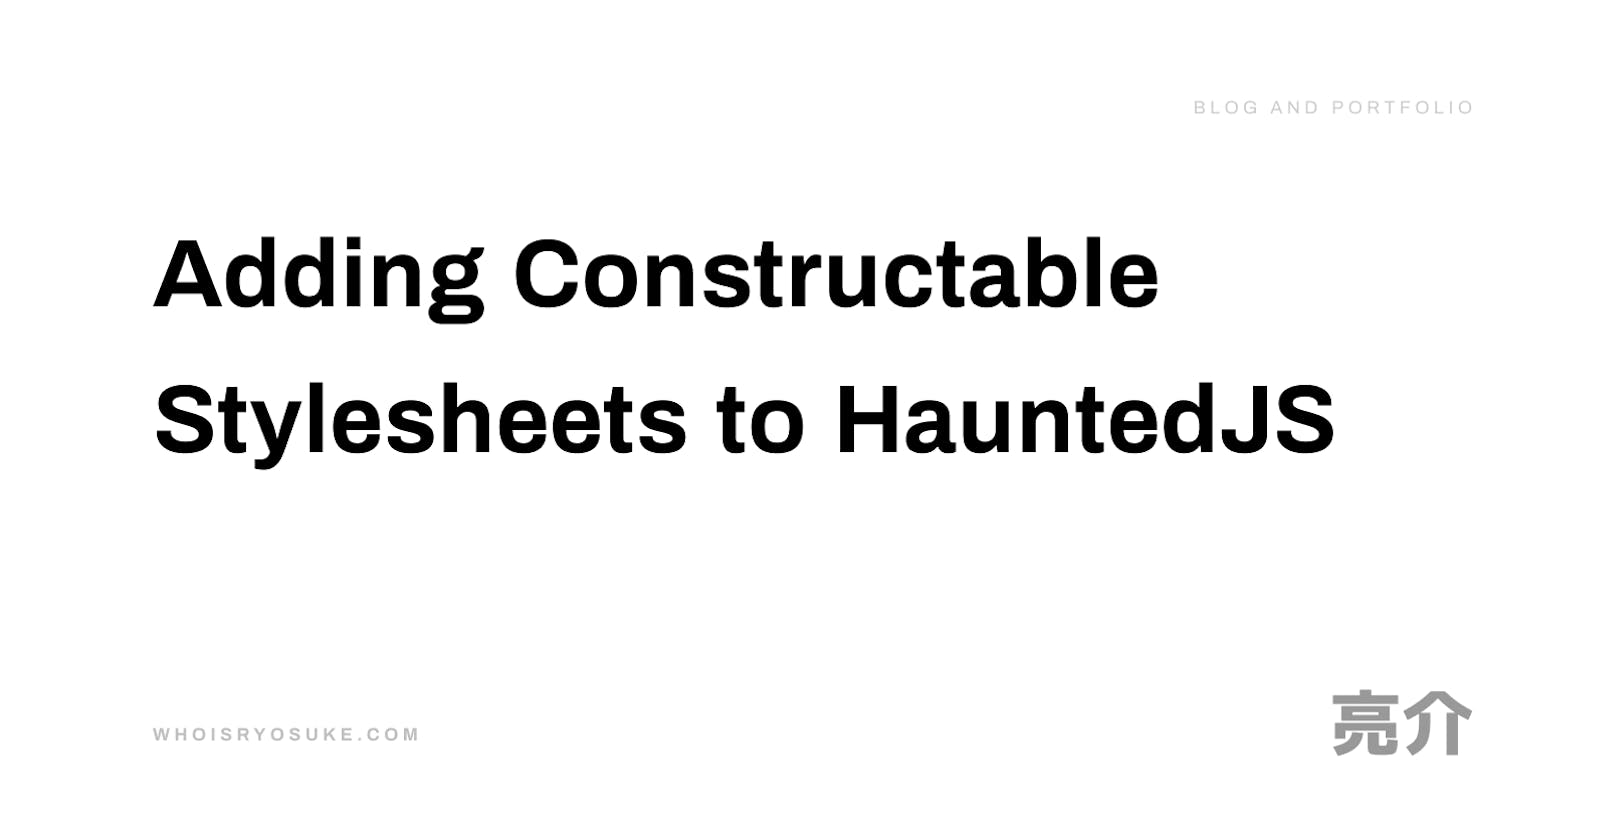 Adding Constructable Stylesheets to HauntedJS